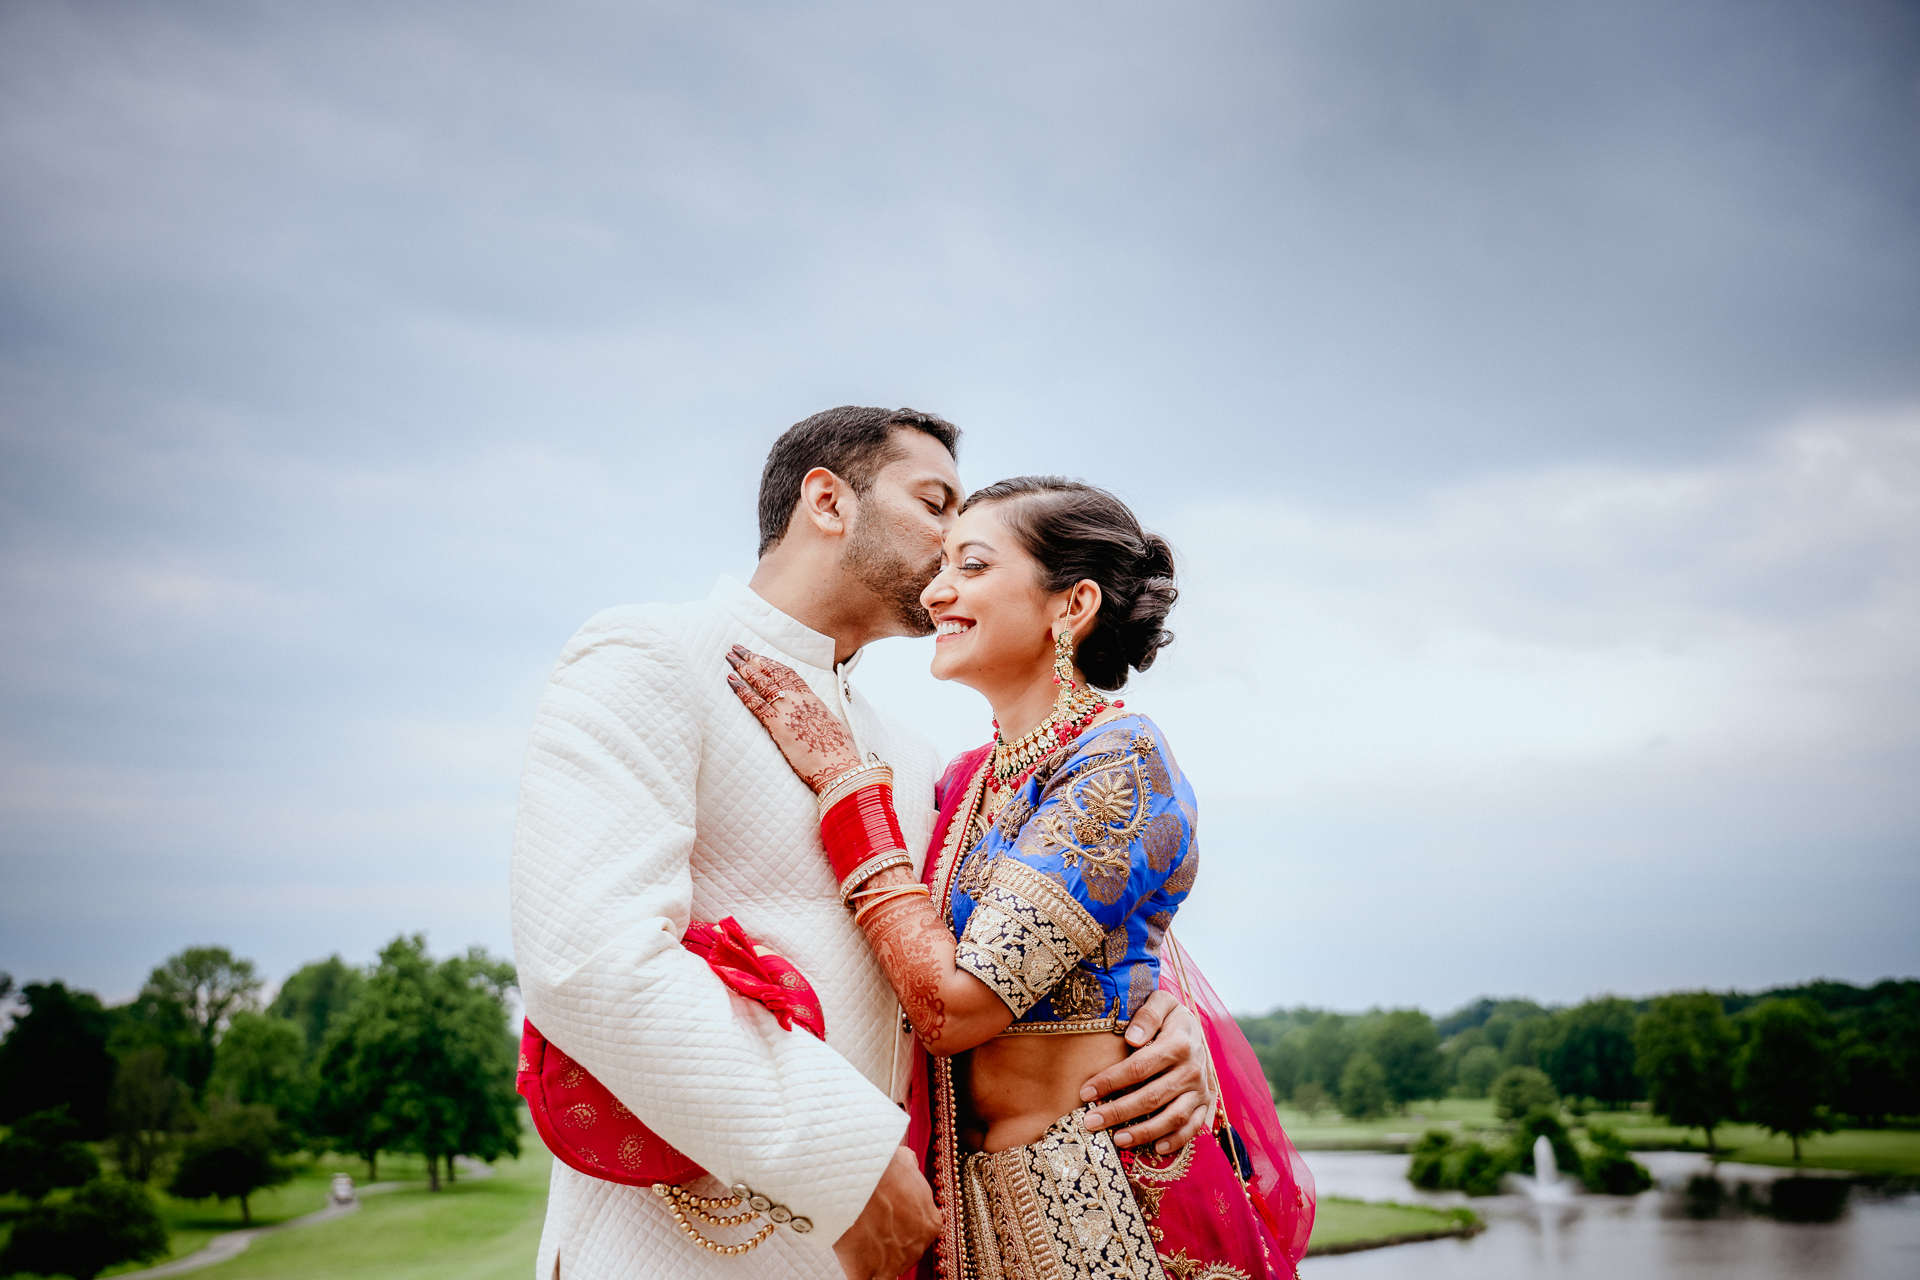 Wedding couple pose | Wedding couple poses, Indian bride photography poses, Indian  wedding couple photography